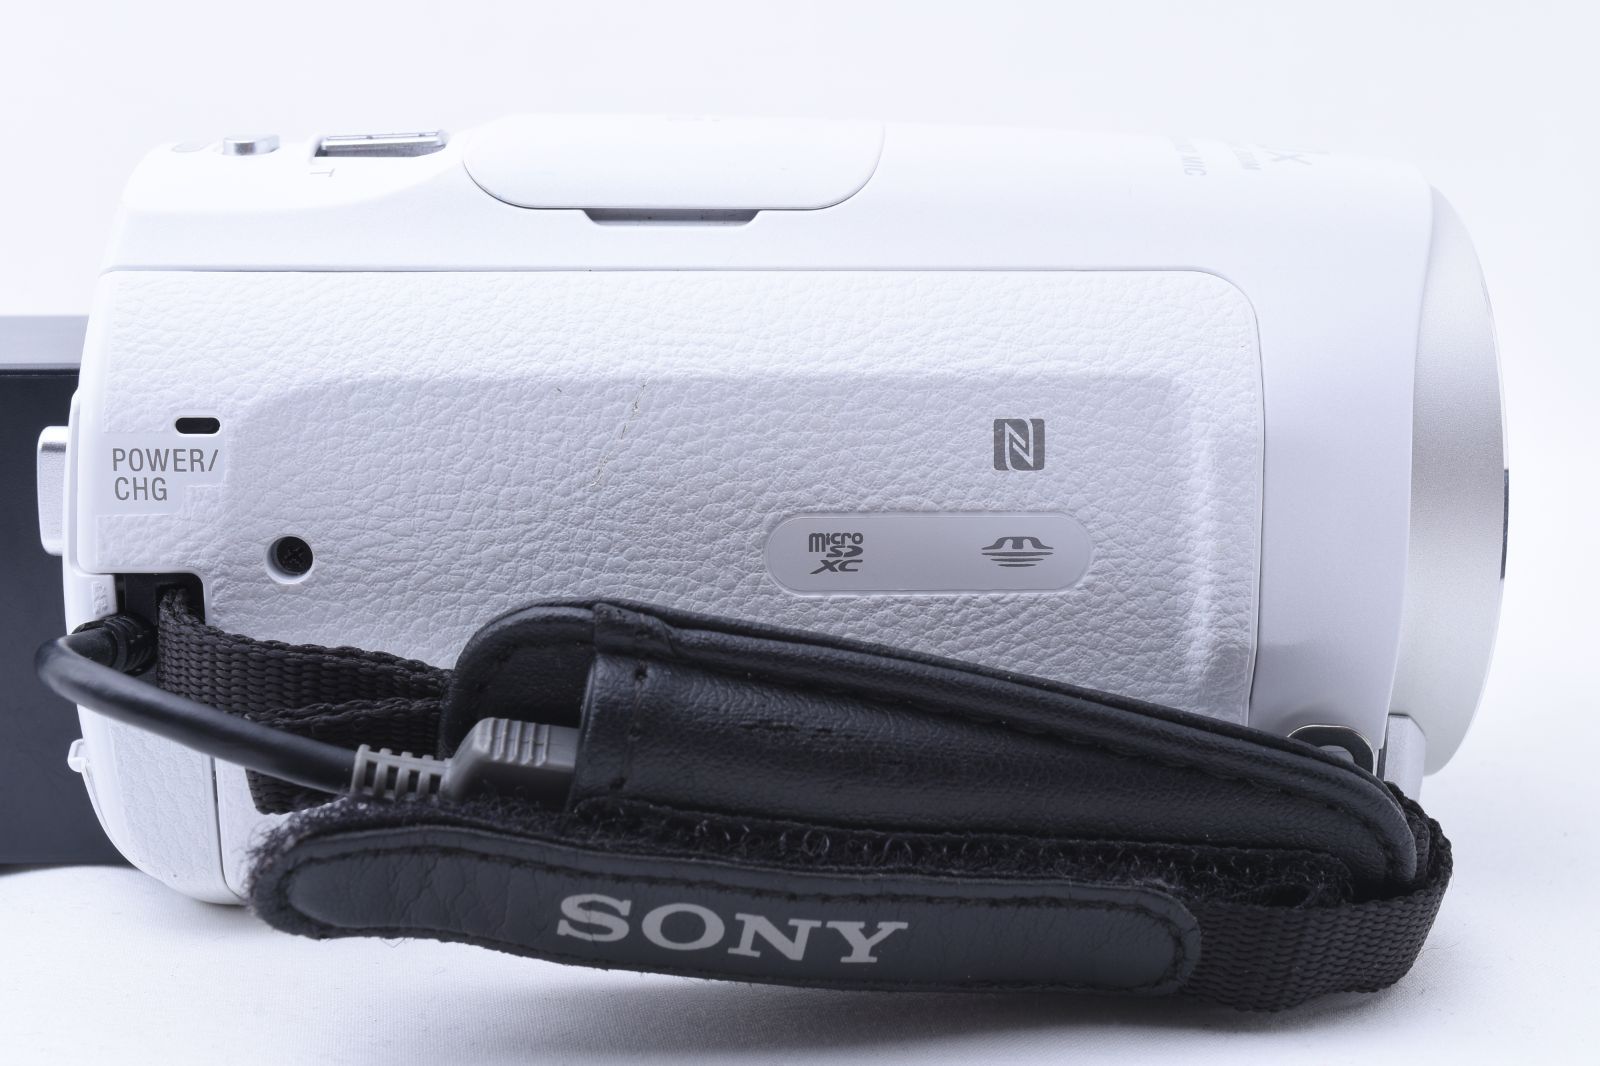 SONY HDビデオカメラ Handycam HDR-PJ670 ホワイト 光学30倍 HDR-PJ670